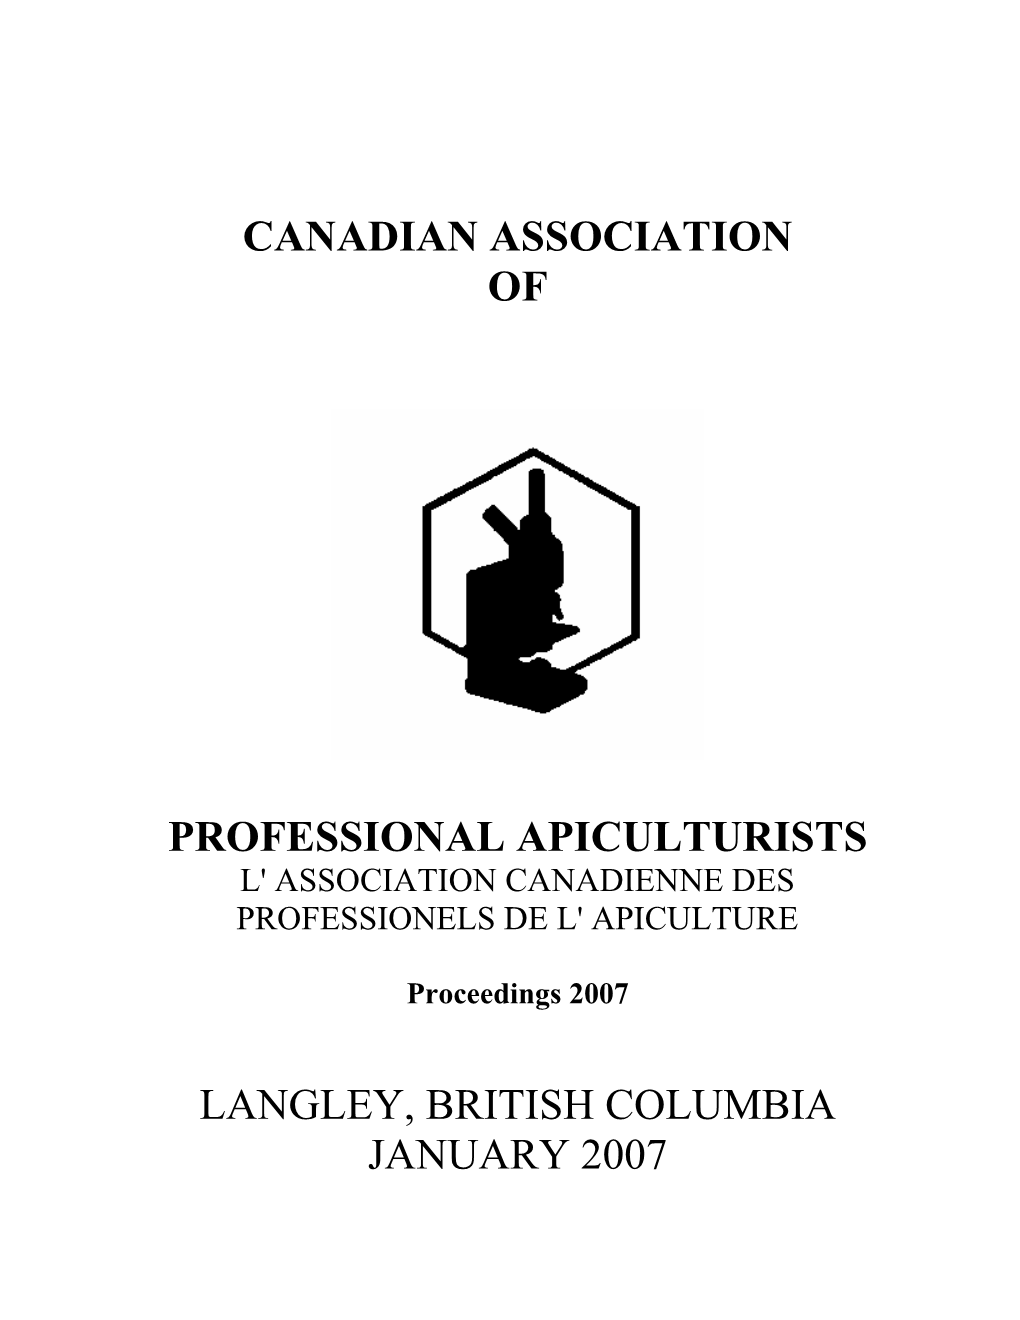 Canadian Association of Professional Apiculturists 2006/07 Business Meeting Agenda